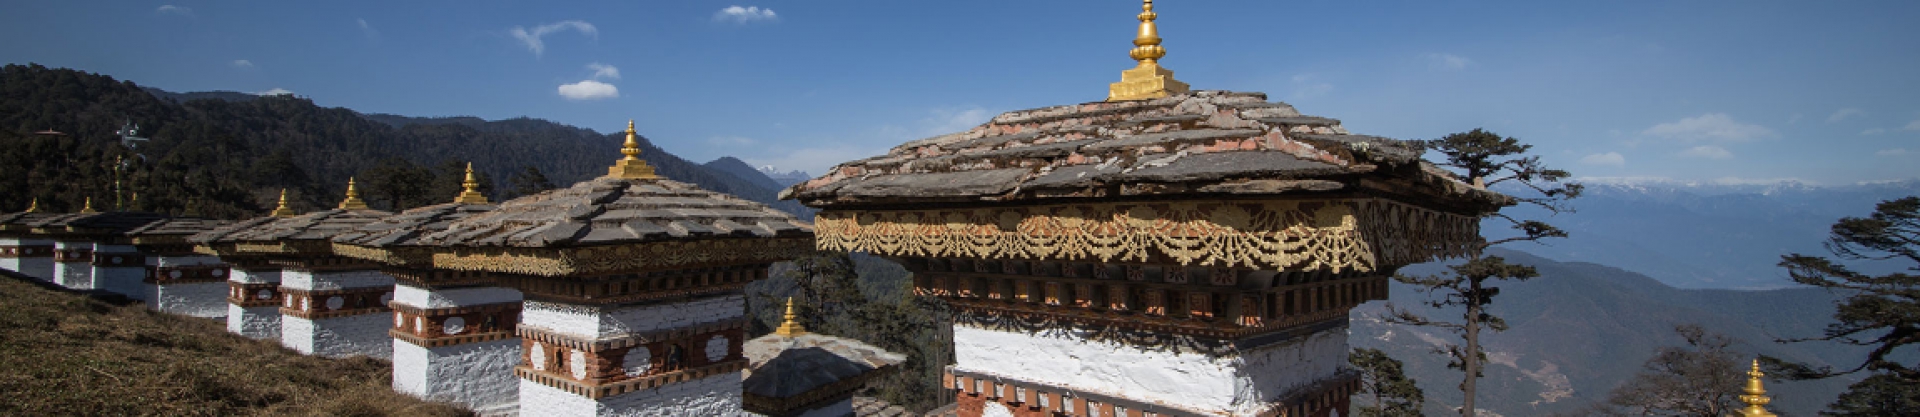 Phuentsholing 2N - Thimphu 2N - Wangdue or Punakha 2N - Bumthang 2N  – Paro 1N